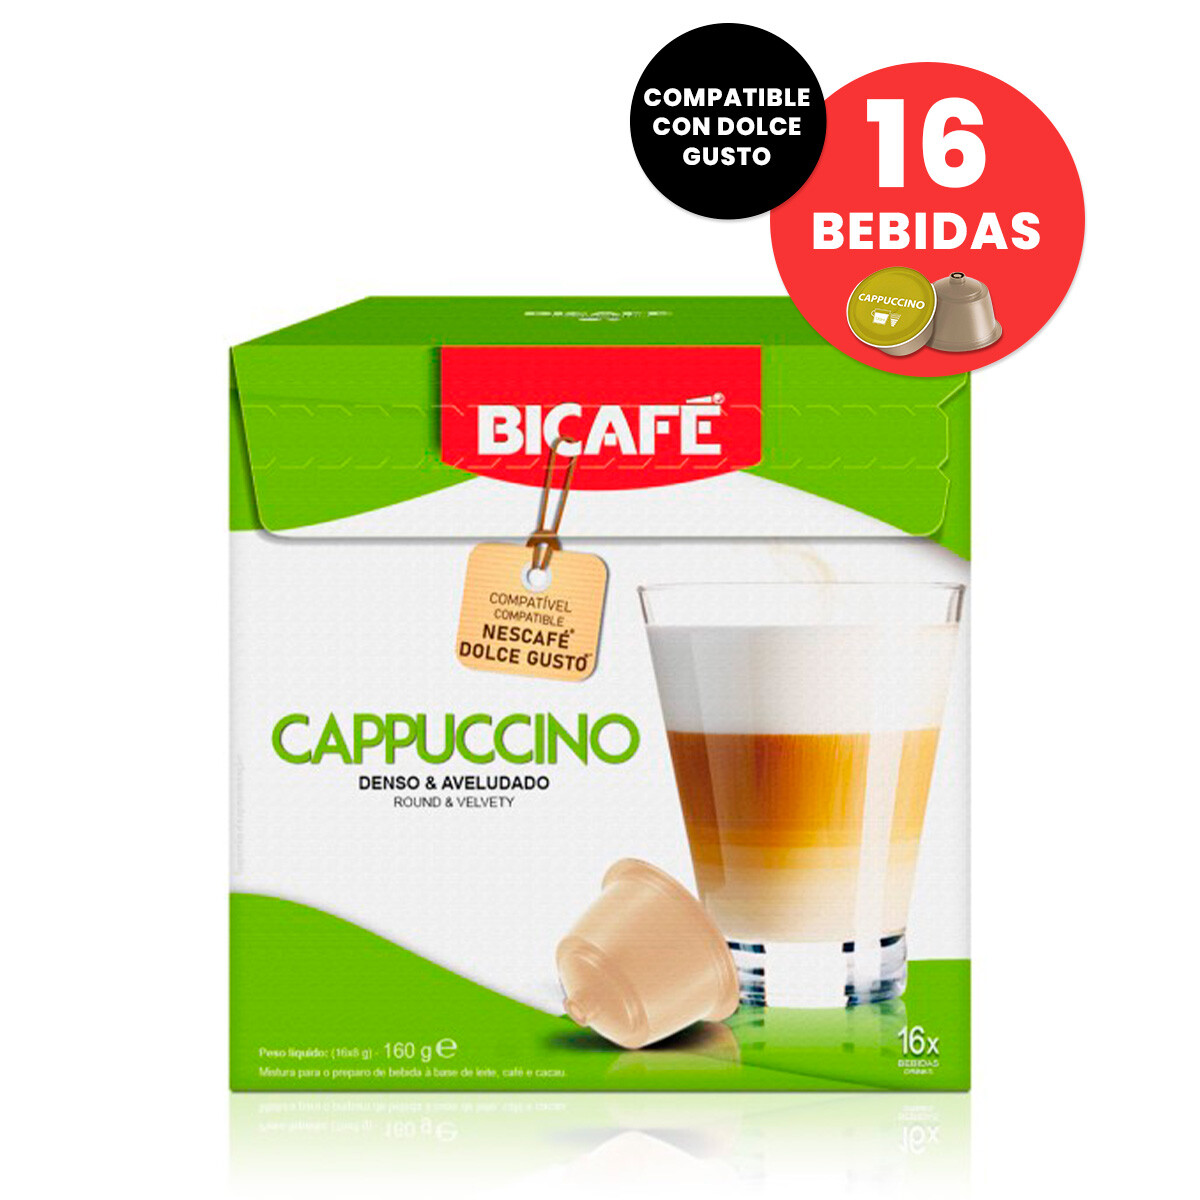 Capsulas Bicafe Cafe Cappuccino Compatible Dolce Gusto X16 Bebidas - 001 